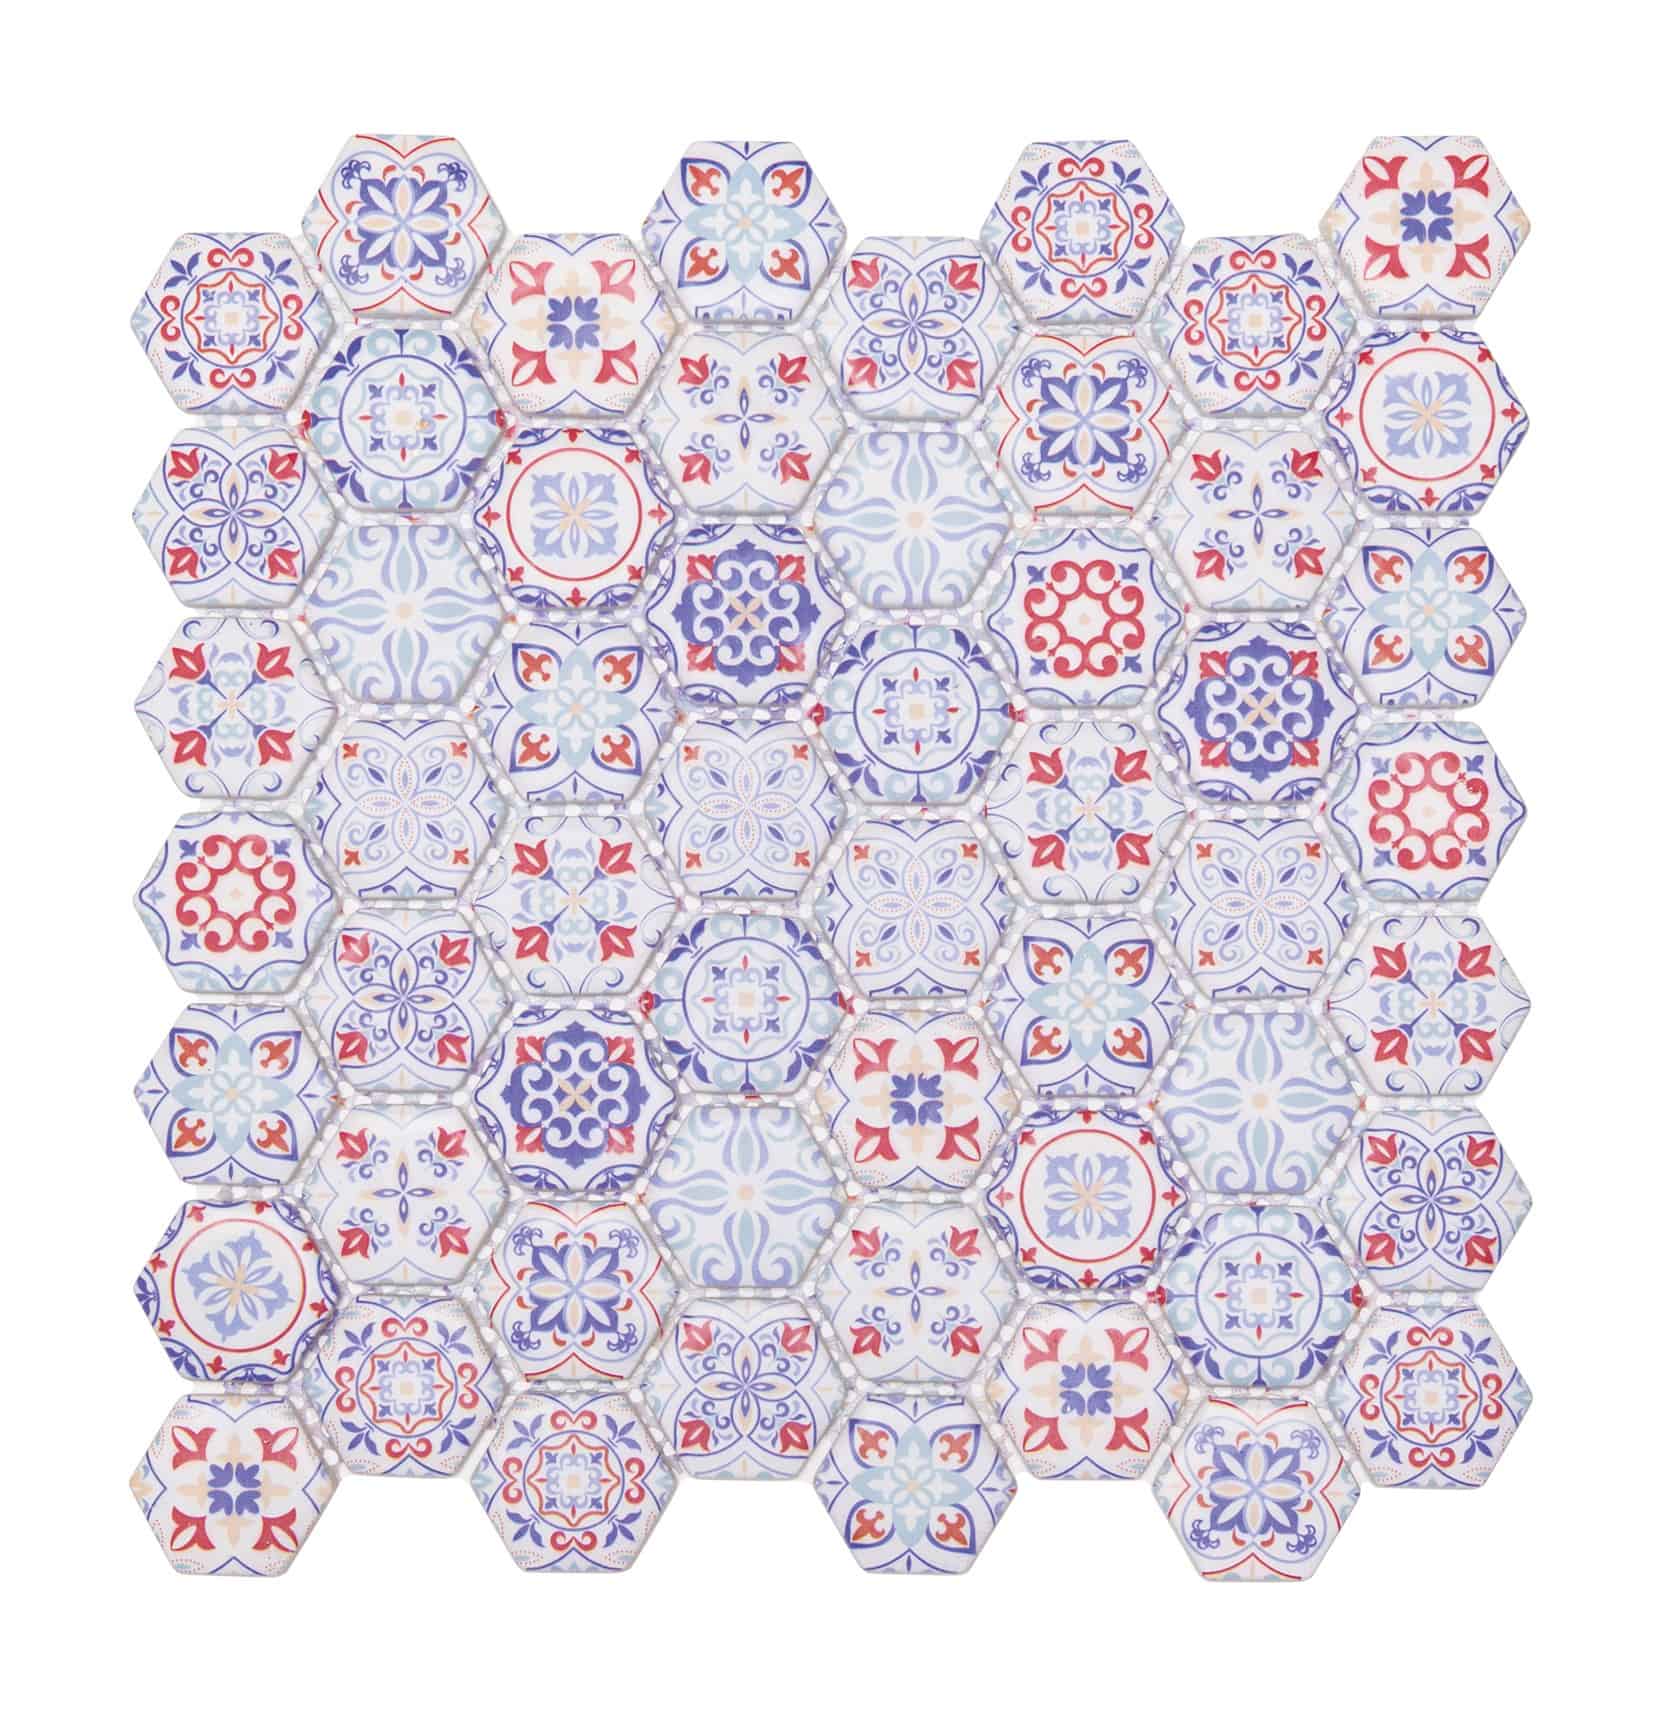 EDJ 022 - Digital Press Hexagon Mosaics